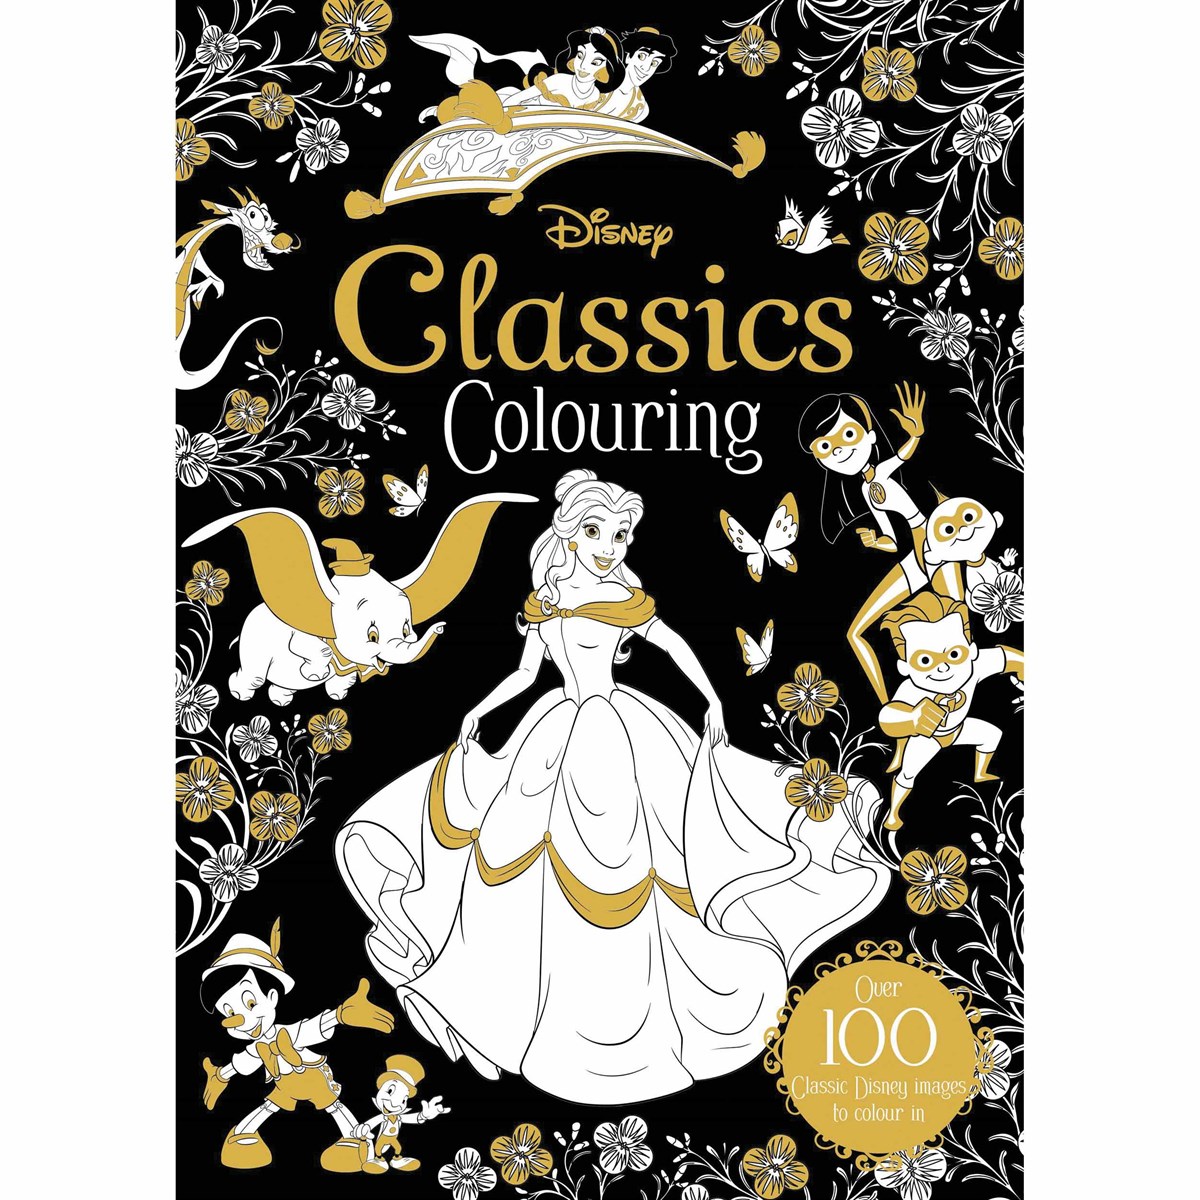 https://www.calendarclub.co.uk/Images/Product/Default/xlarge/265822-disney-classics-colouring-book-main.jpg